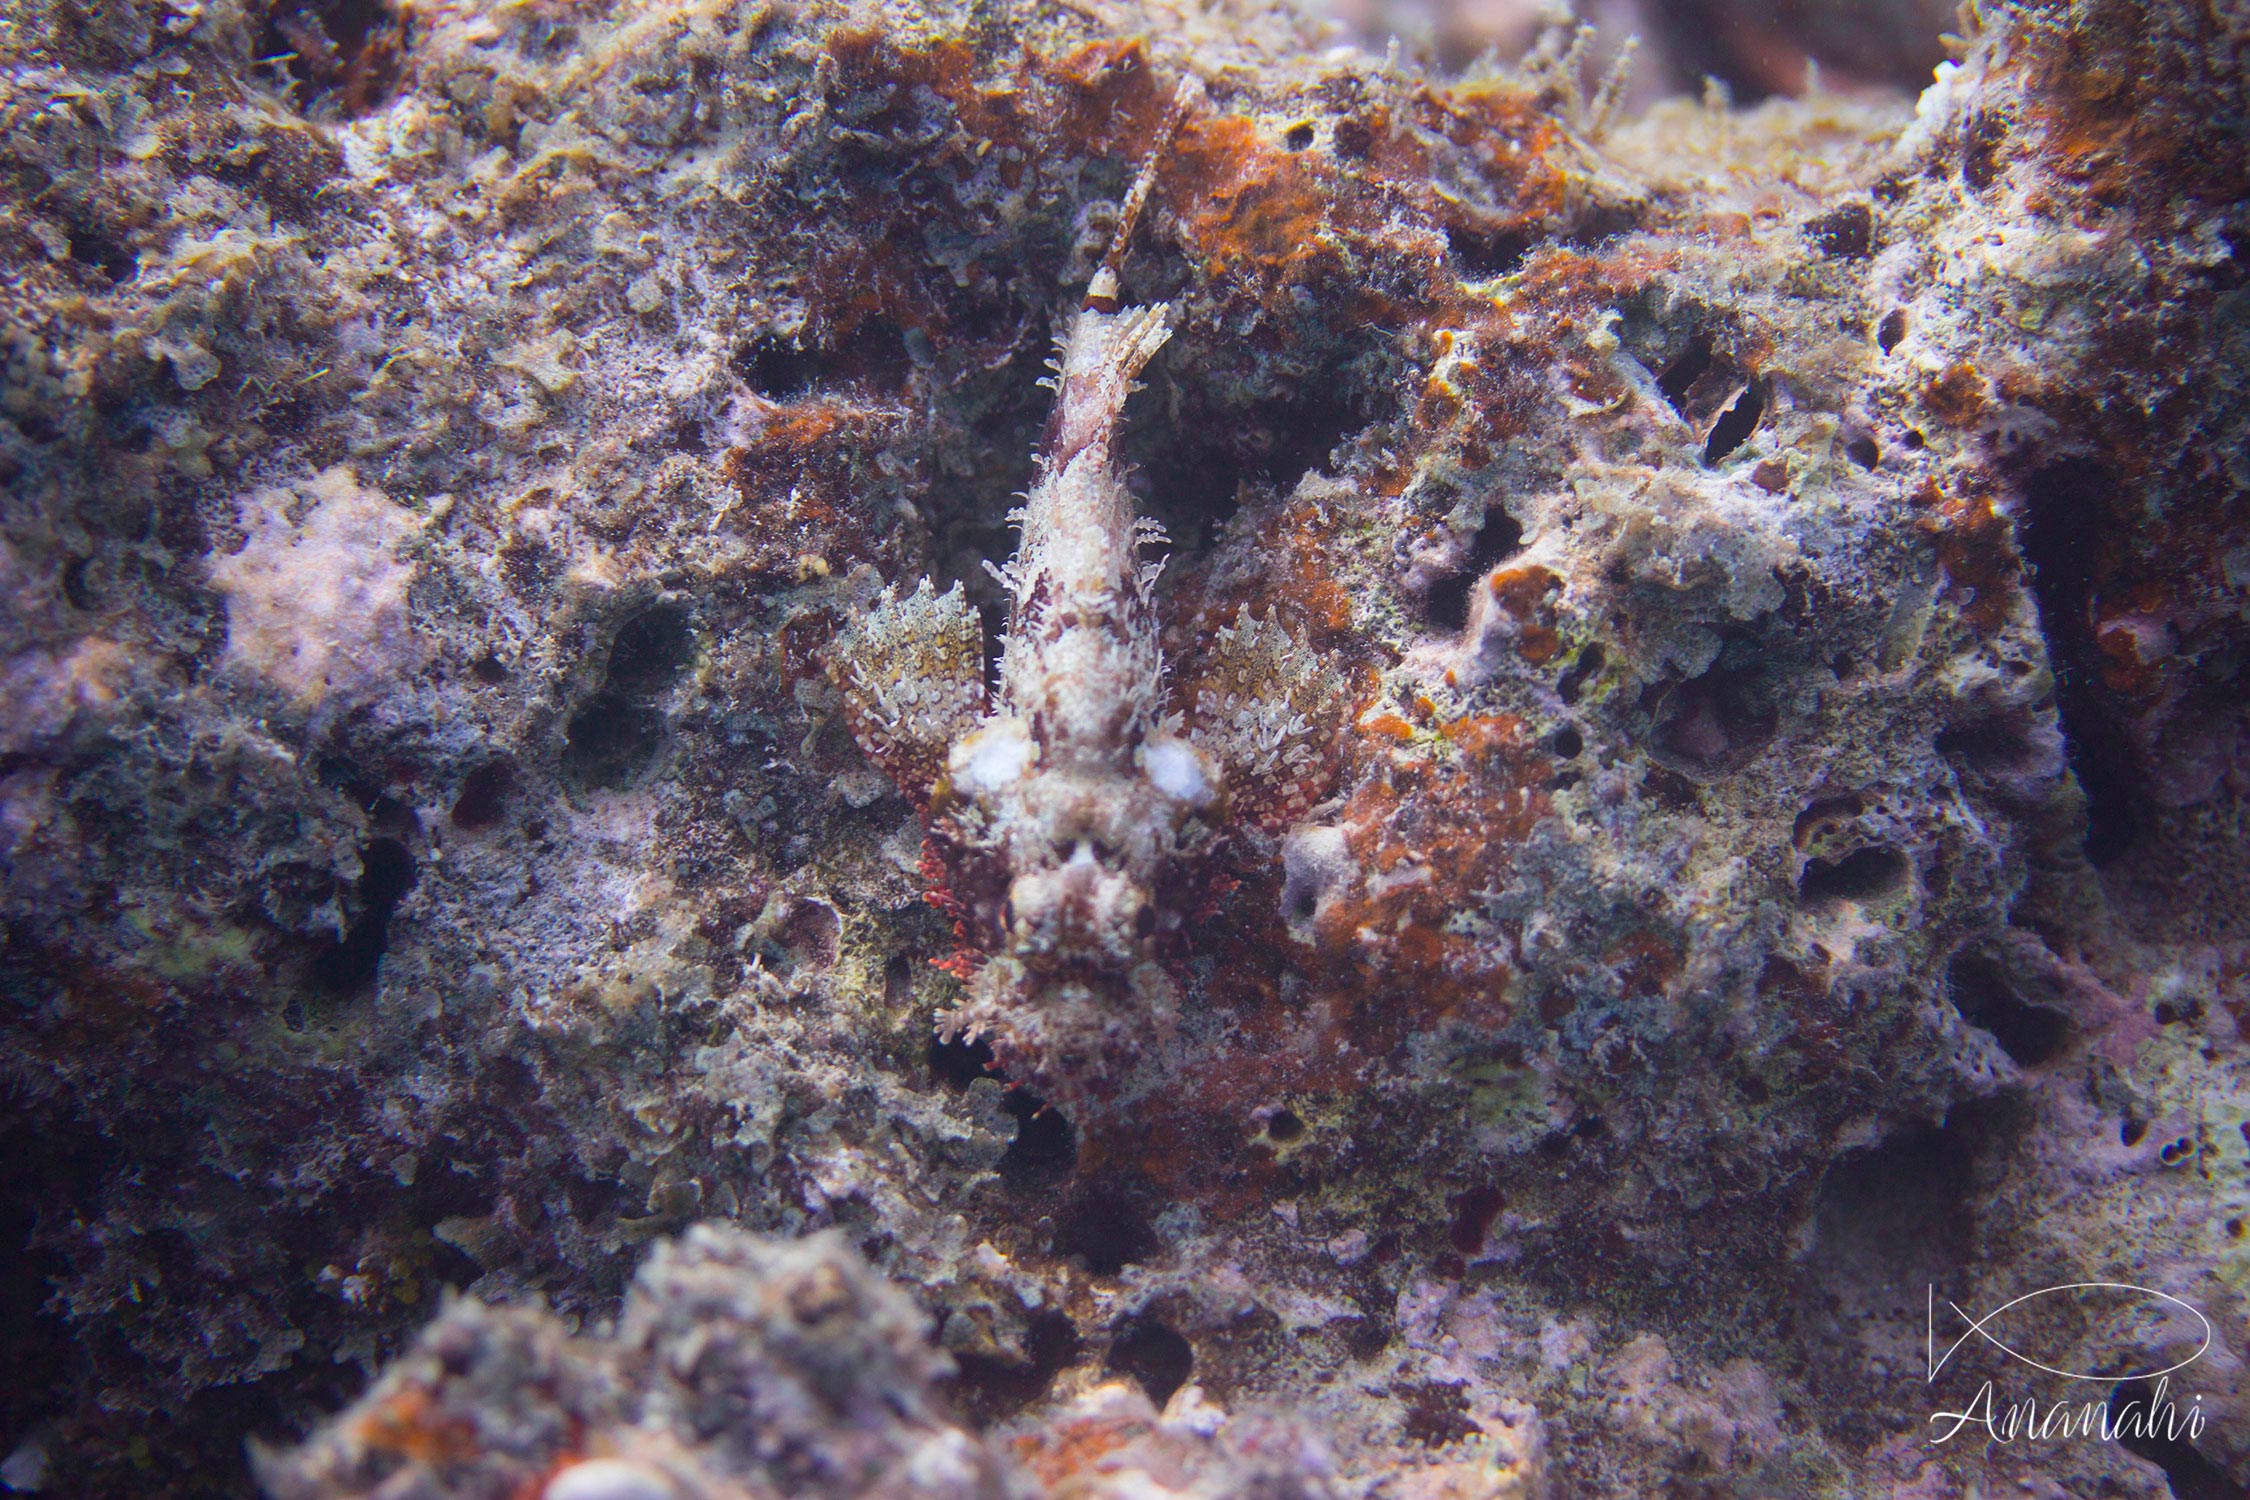 Tasseled scorpionfish of Mayotte